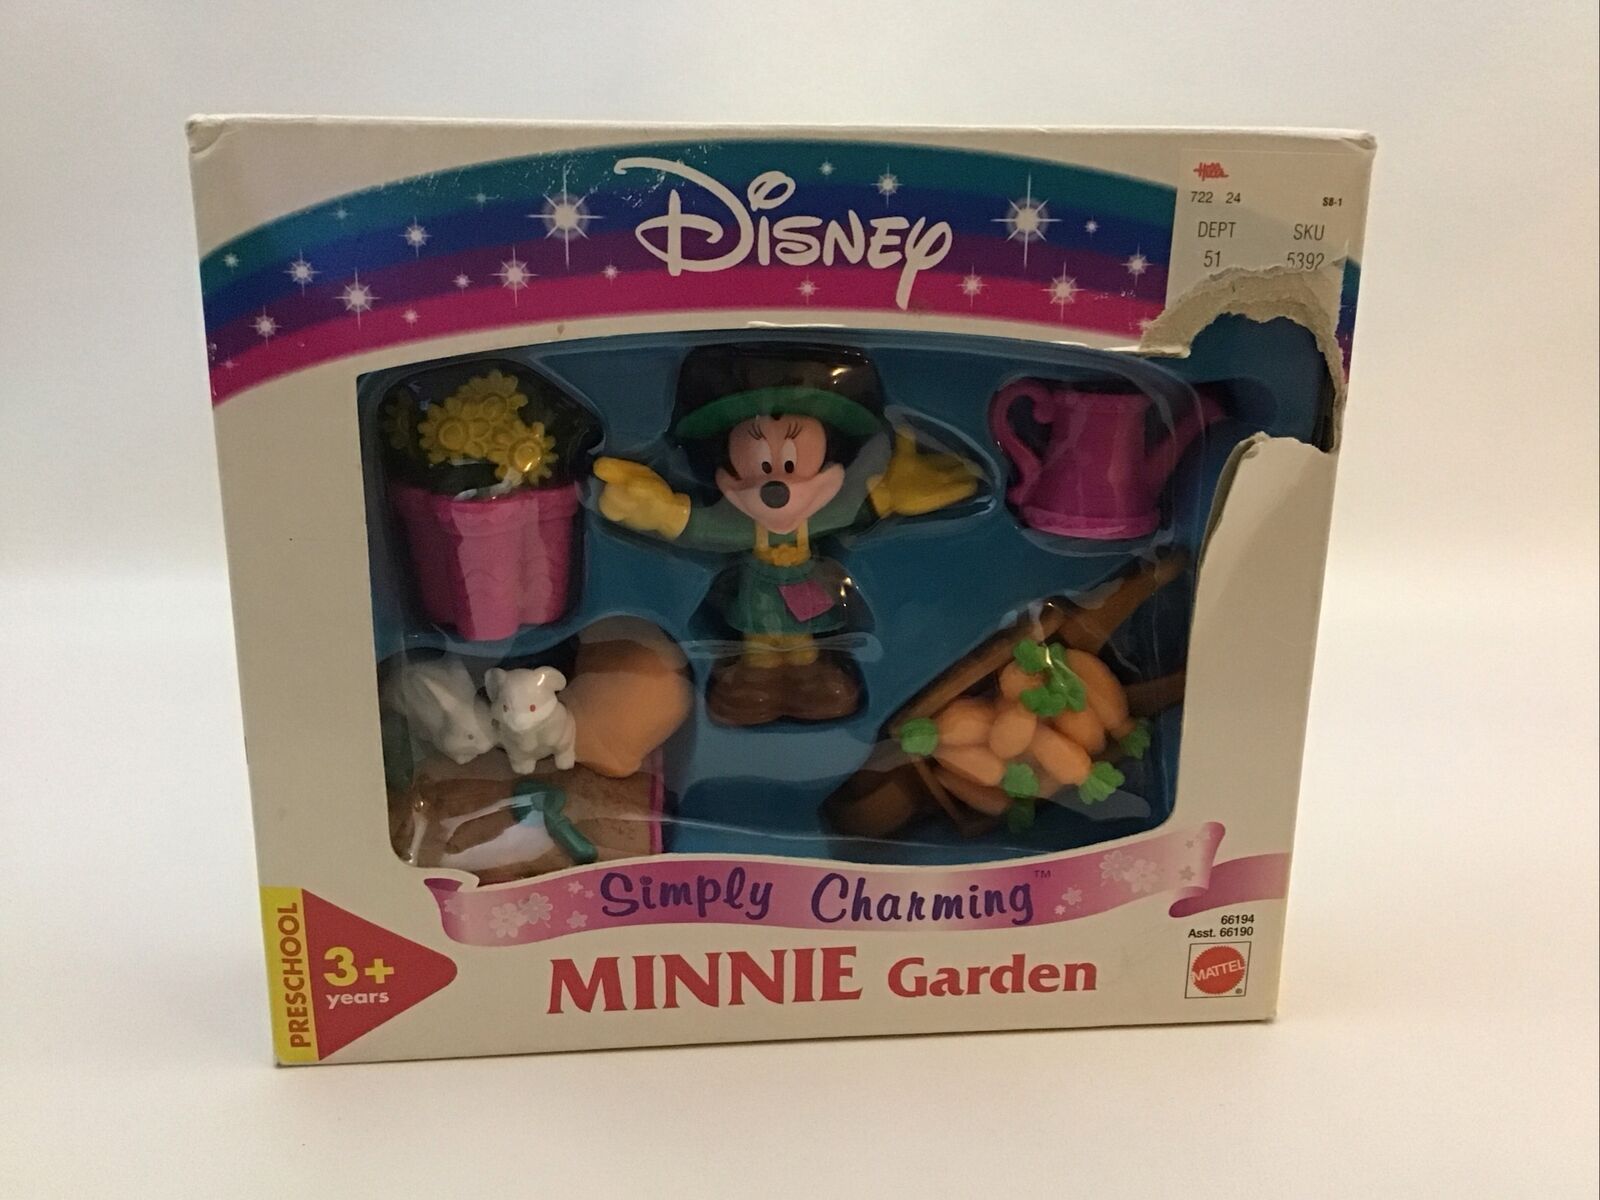 Disney Simply Charming Minnie Garden Mattel 66194 New in Damaged Box